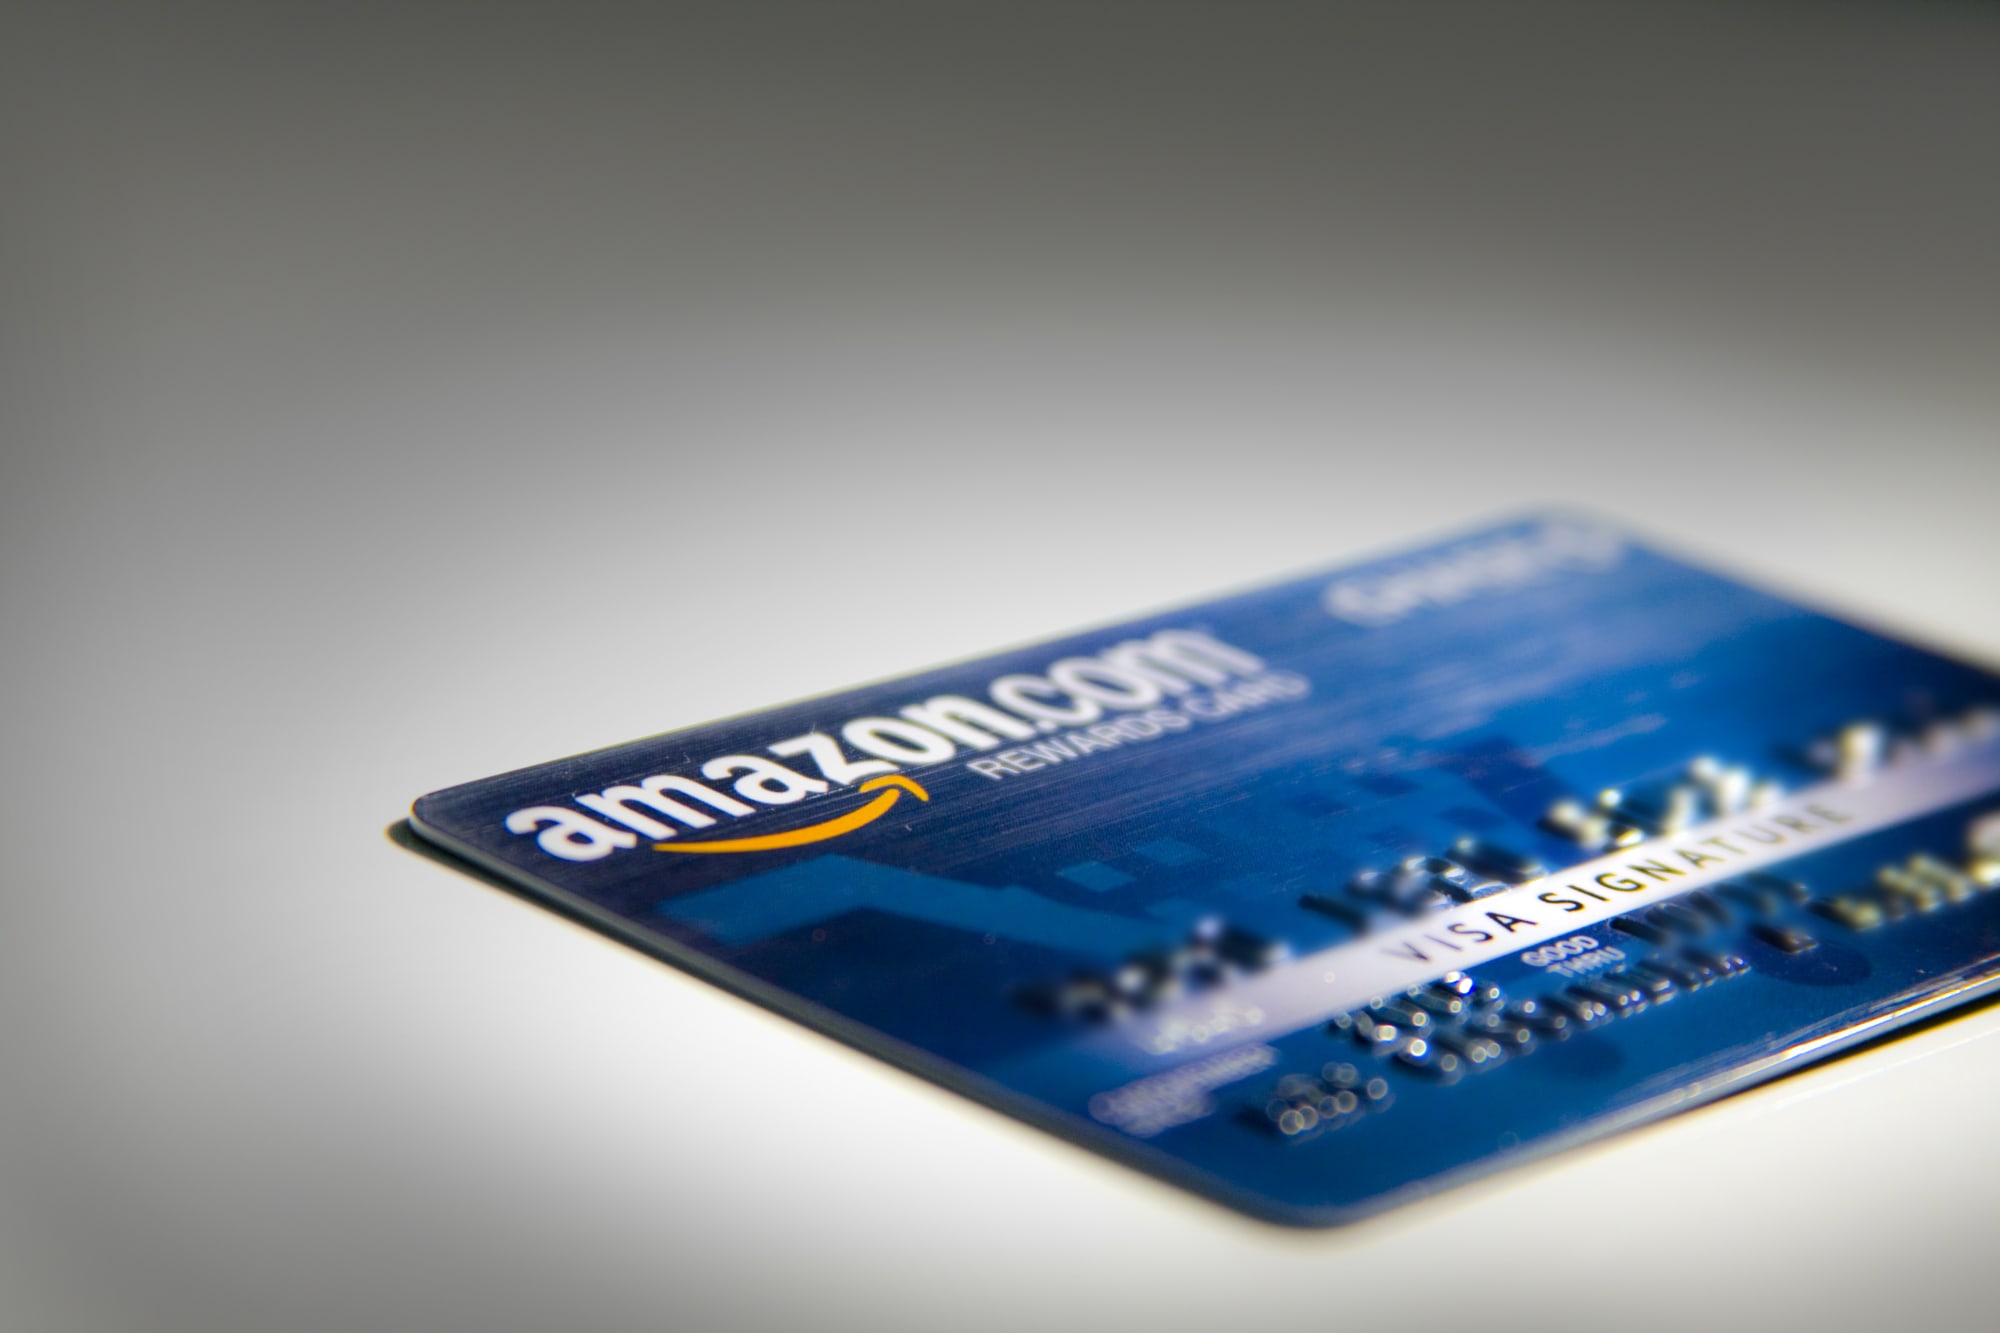 Amazon.com credit card